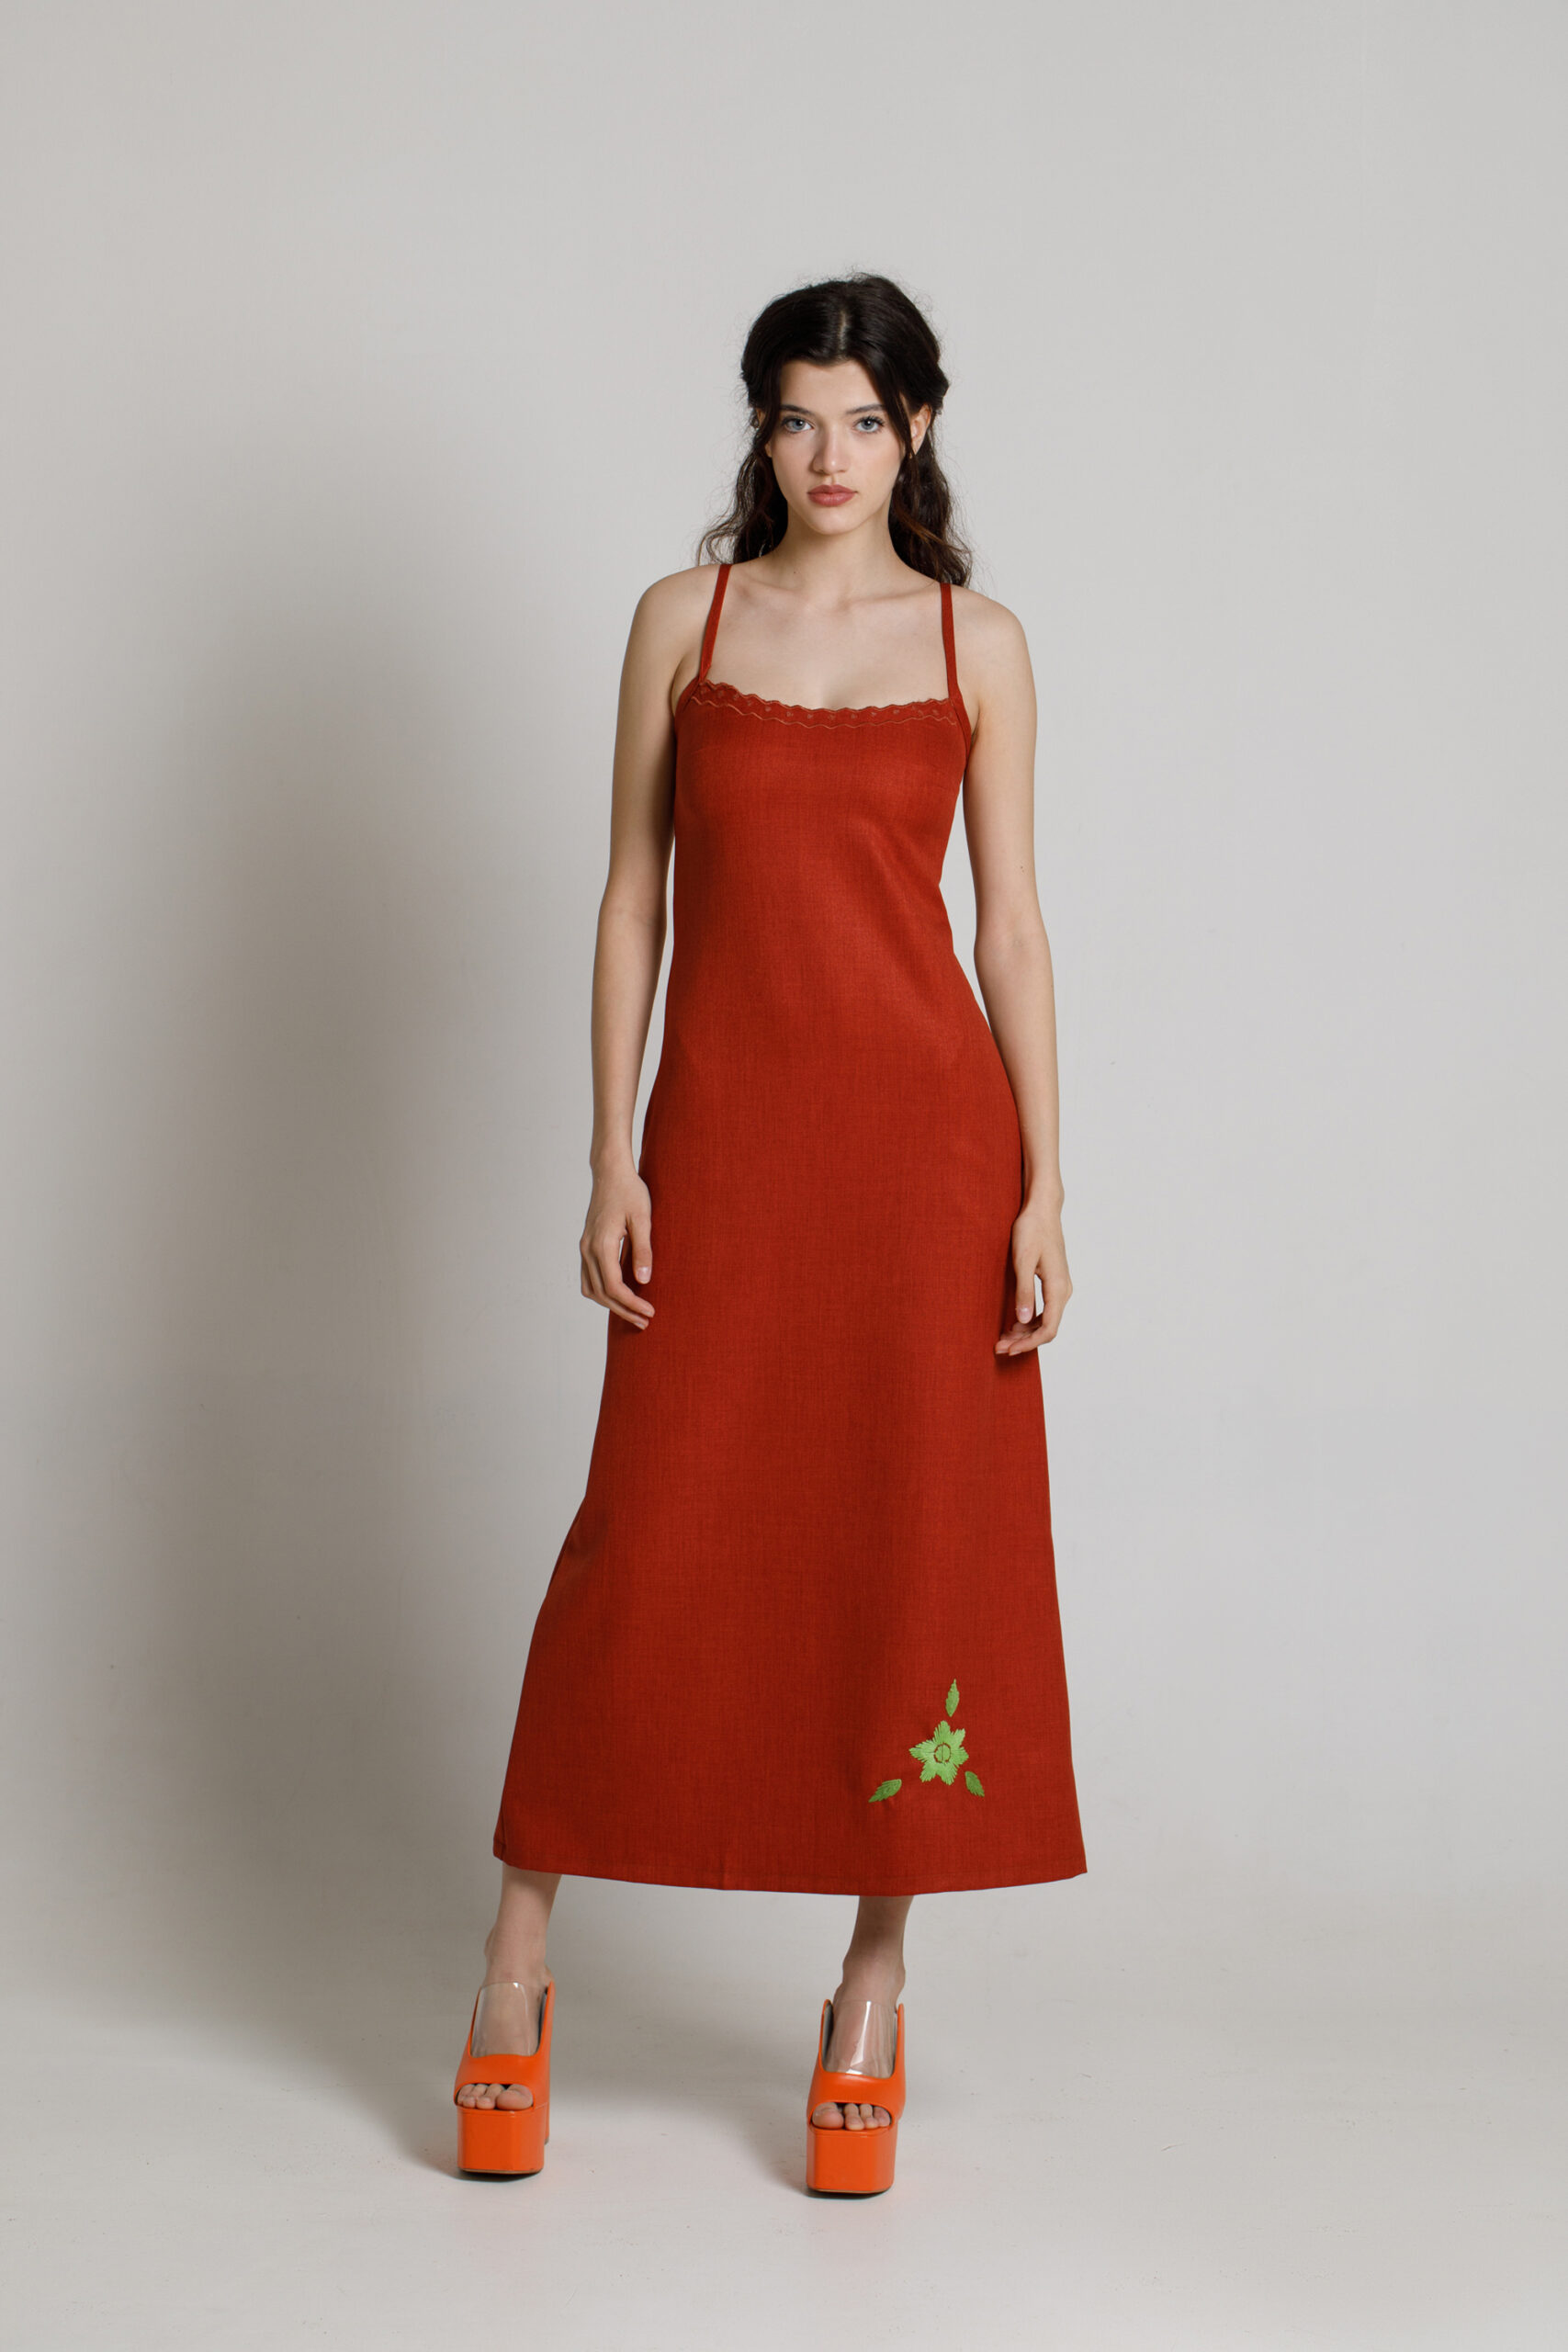 LOUISIANA Casual dress made of brick red linen material. Natural fabrics, original design, handmade embroidery